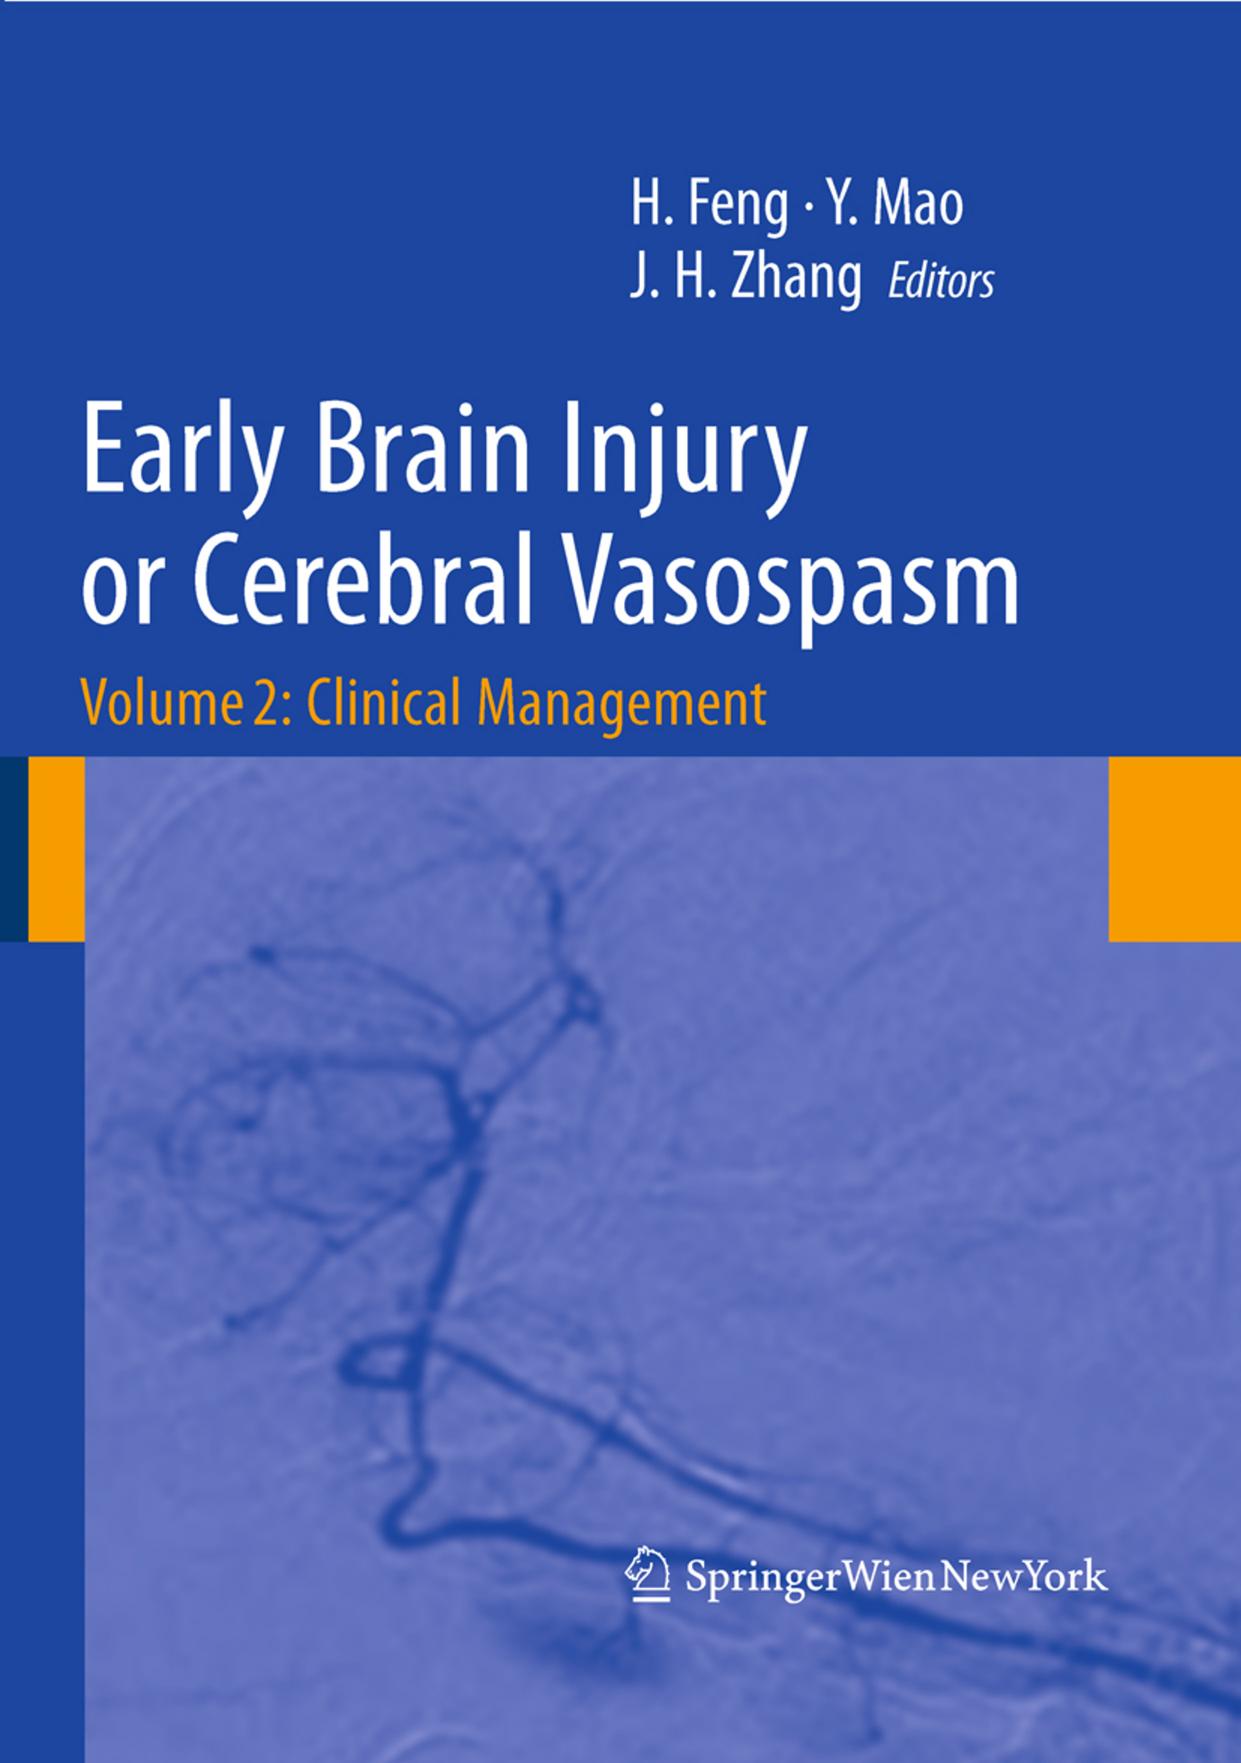 Early Brain Injury or Cerebral Vasospasm_ Volume 2_ Clinical Management (Acta Neurochirurgica Supplementum, Suppl. 110_2).jpg